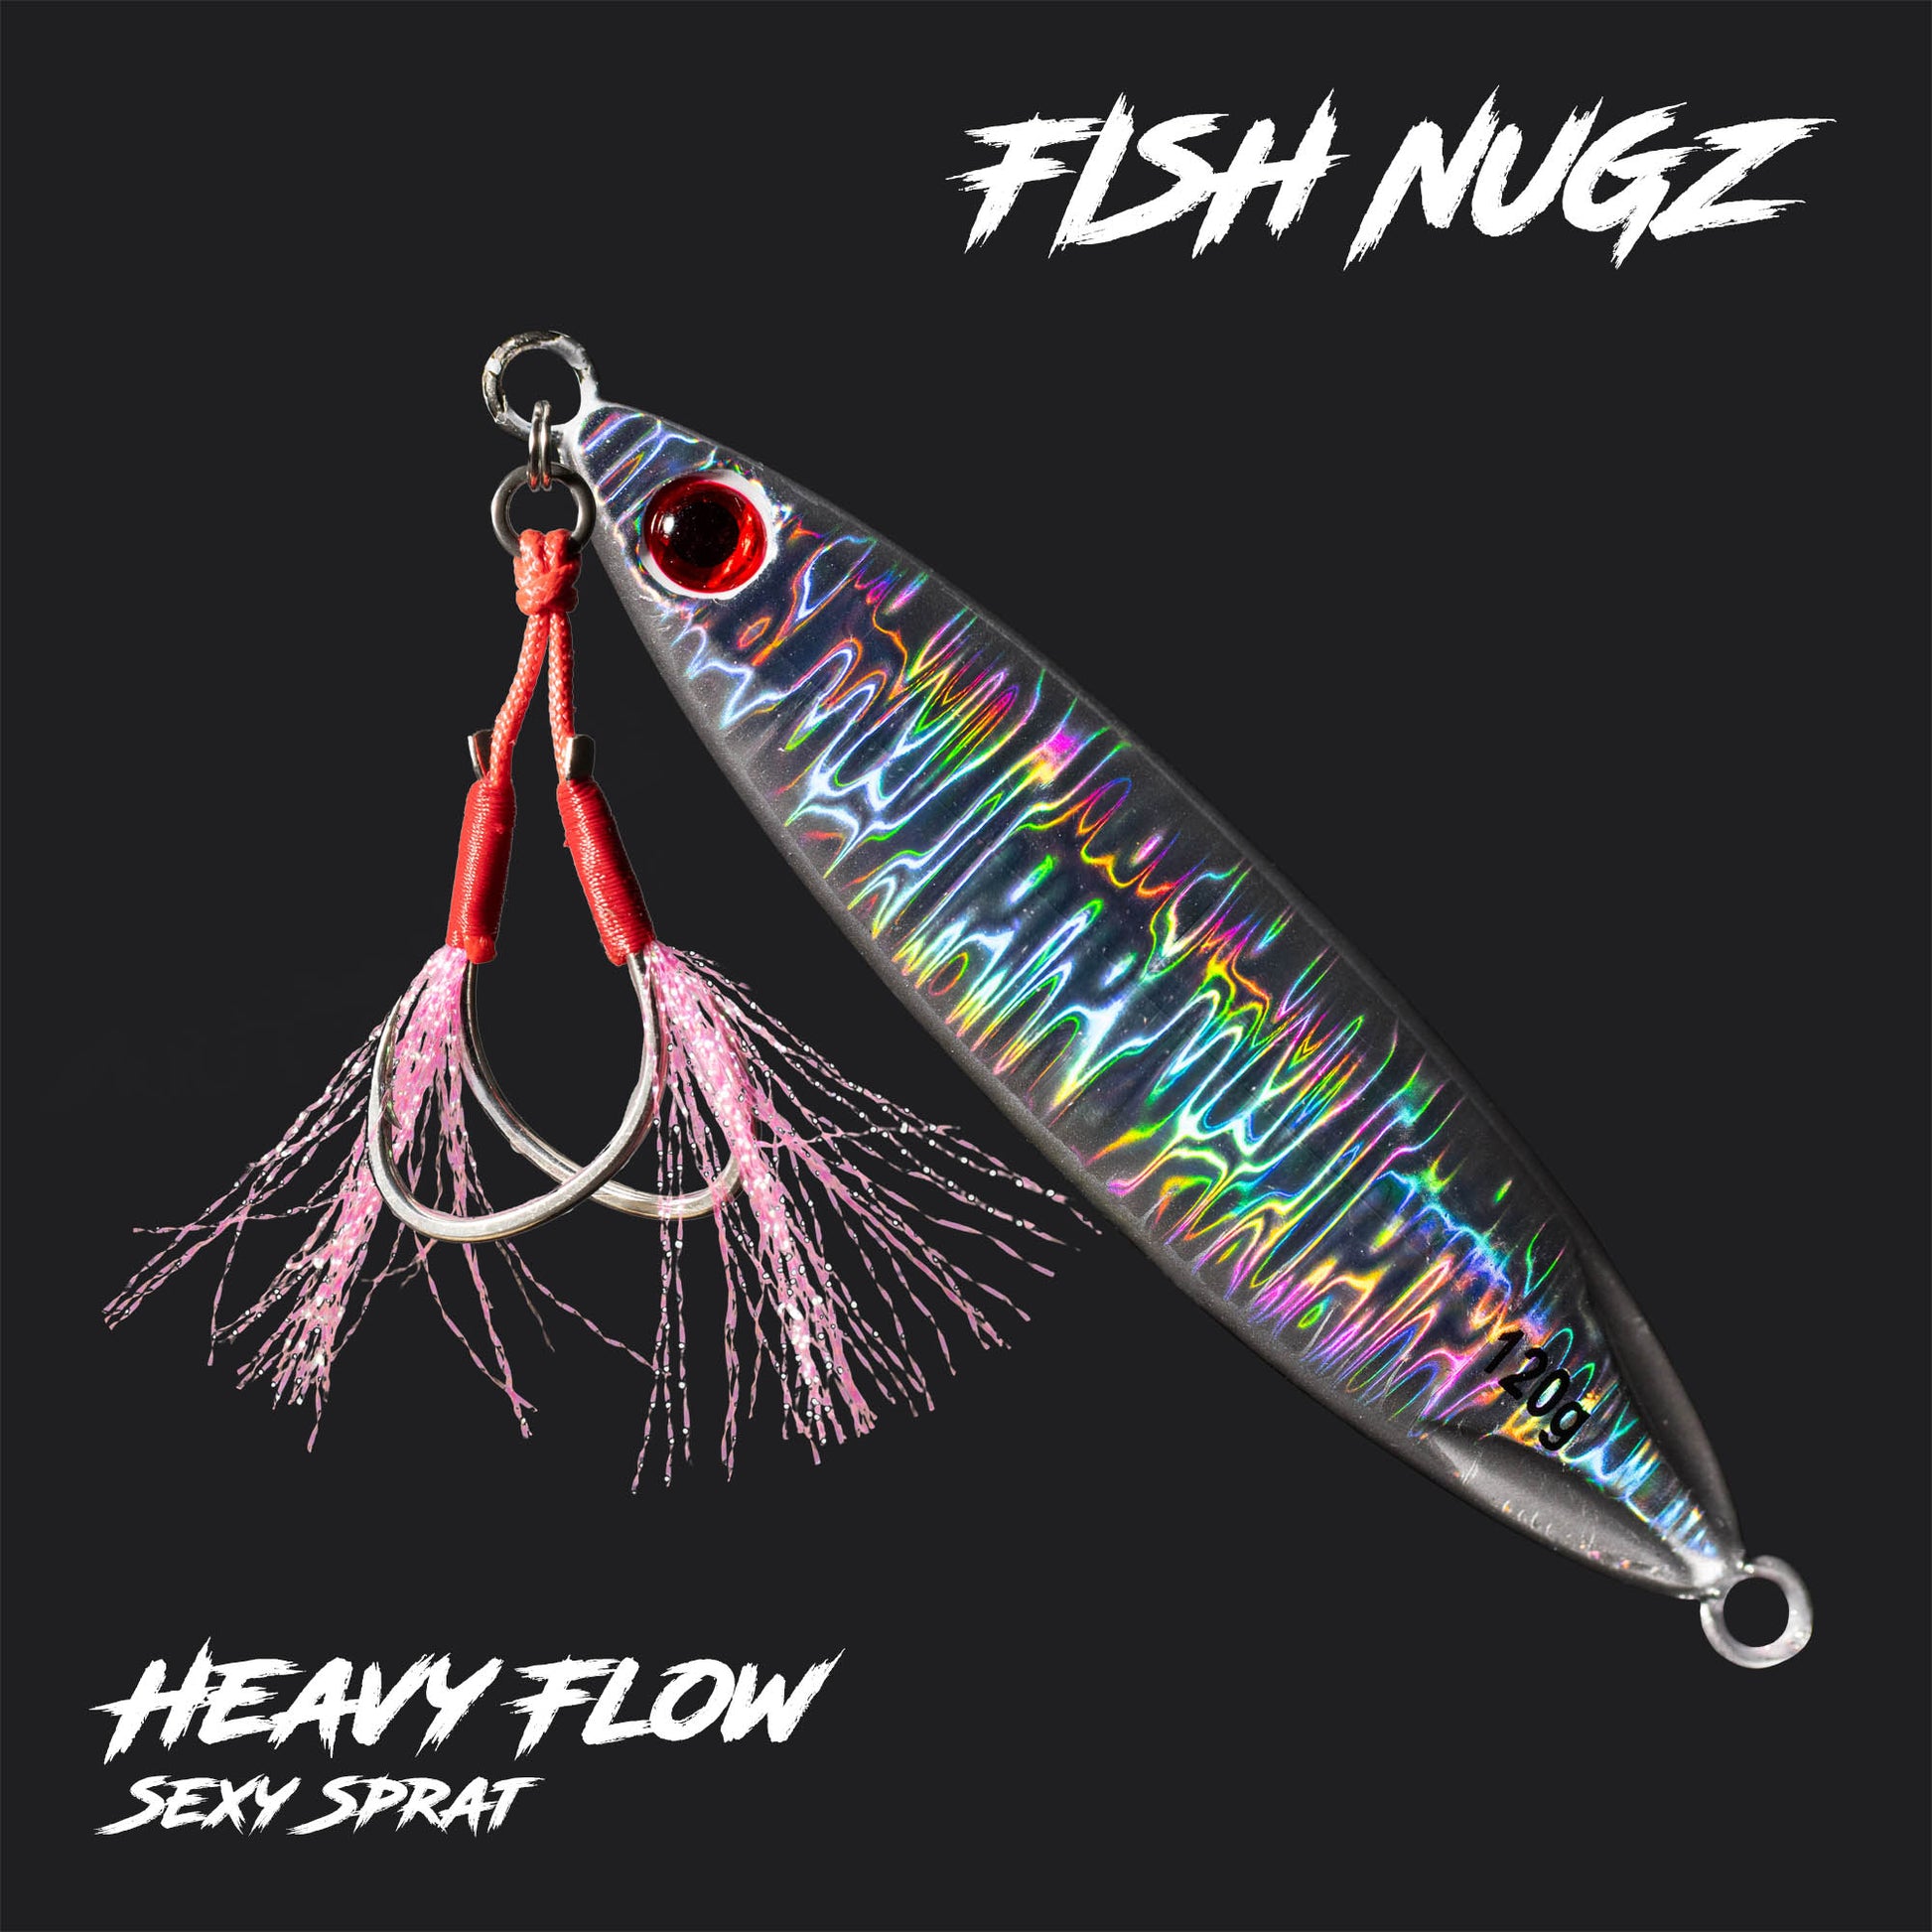 Fish Nugz Heavy Flow Slow Jig in Sexy Sprat colour